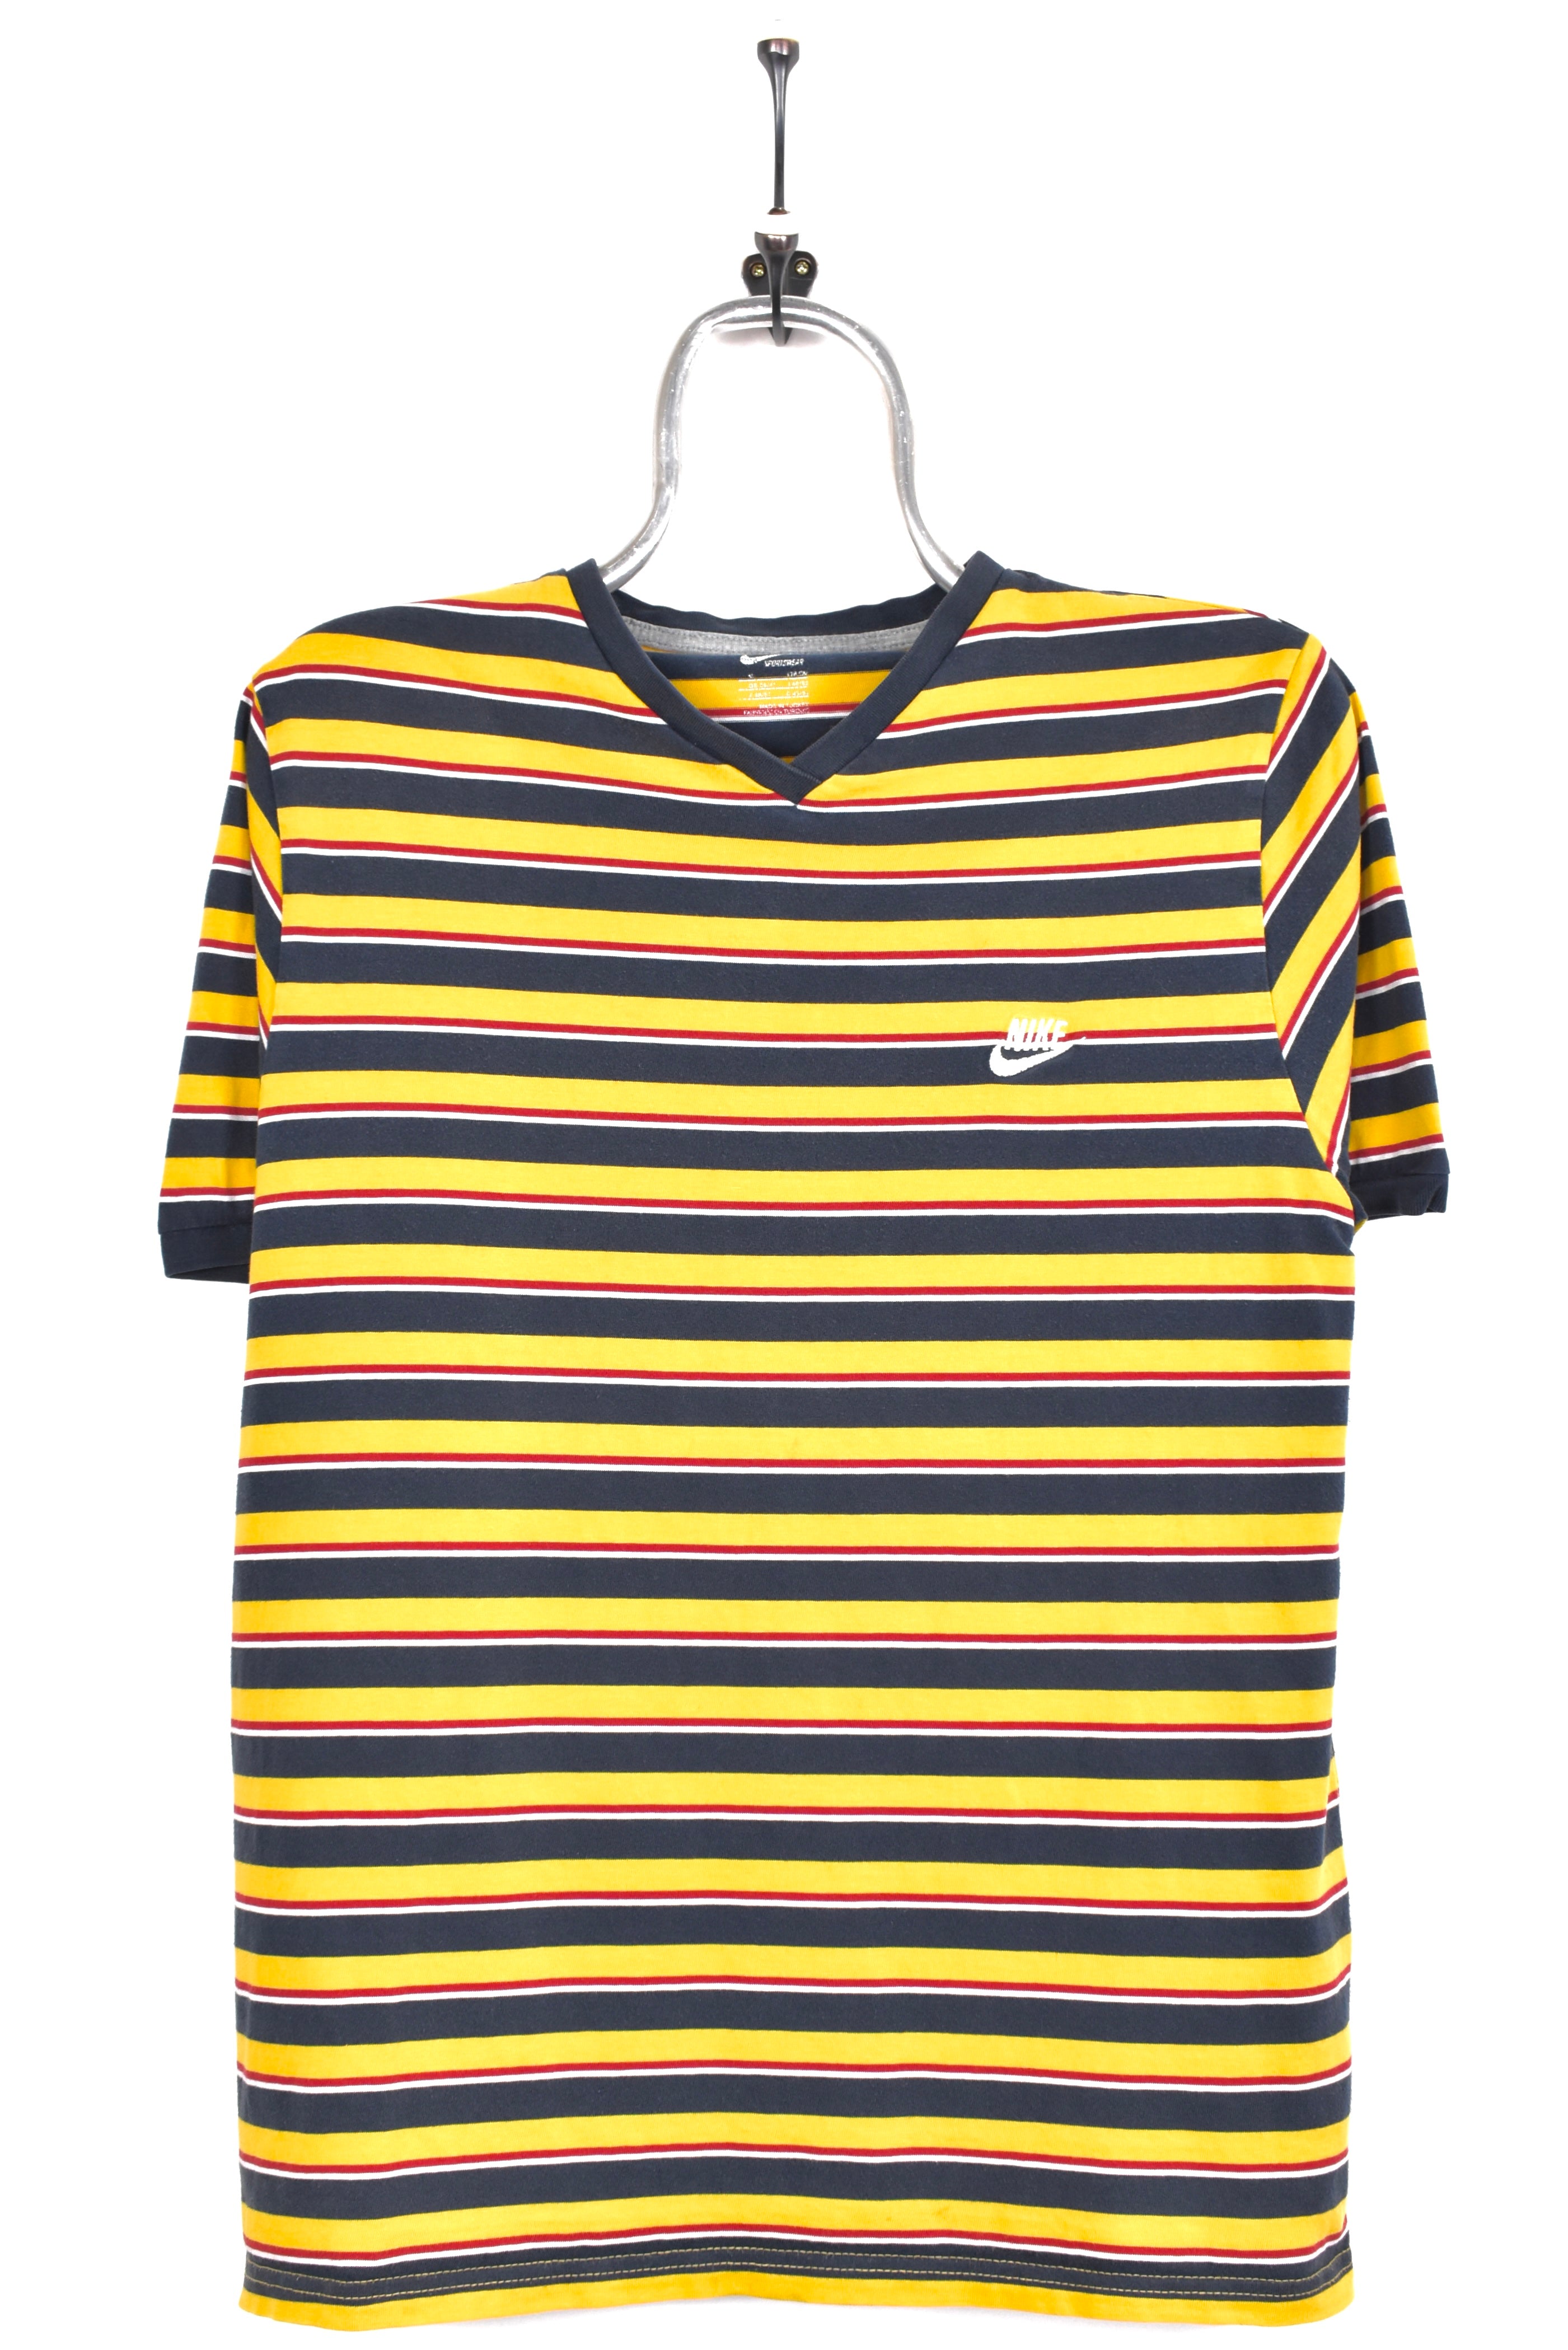 Vintage Nike shirt, striped embroidered tee - AU S NIKE